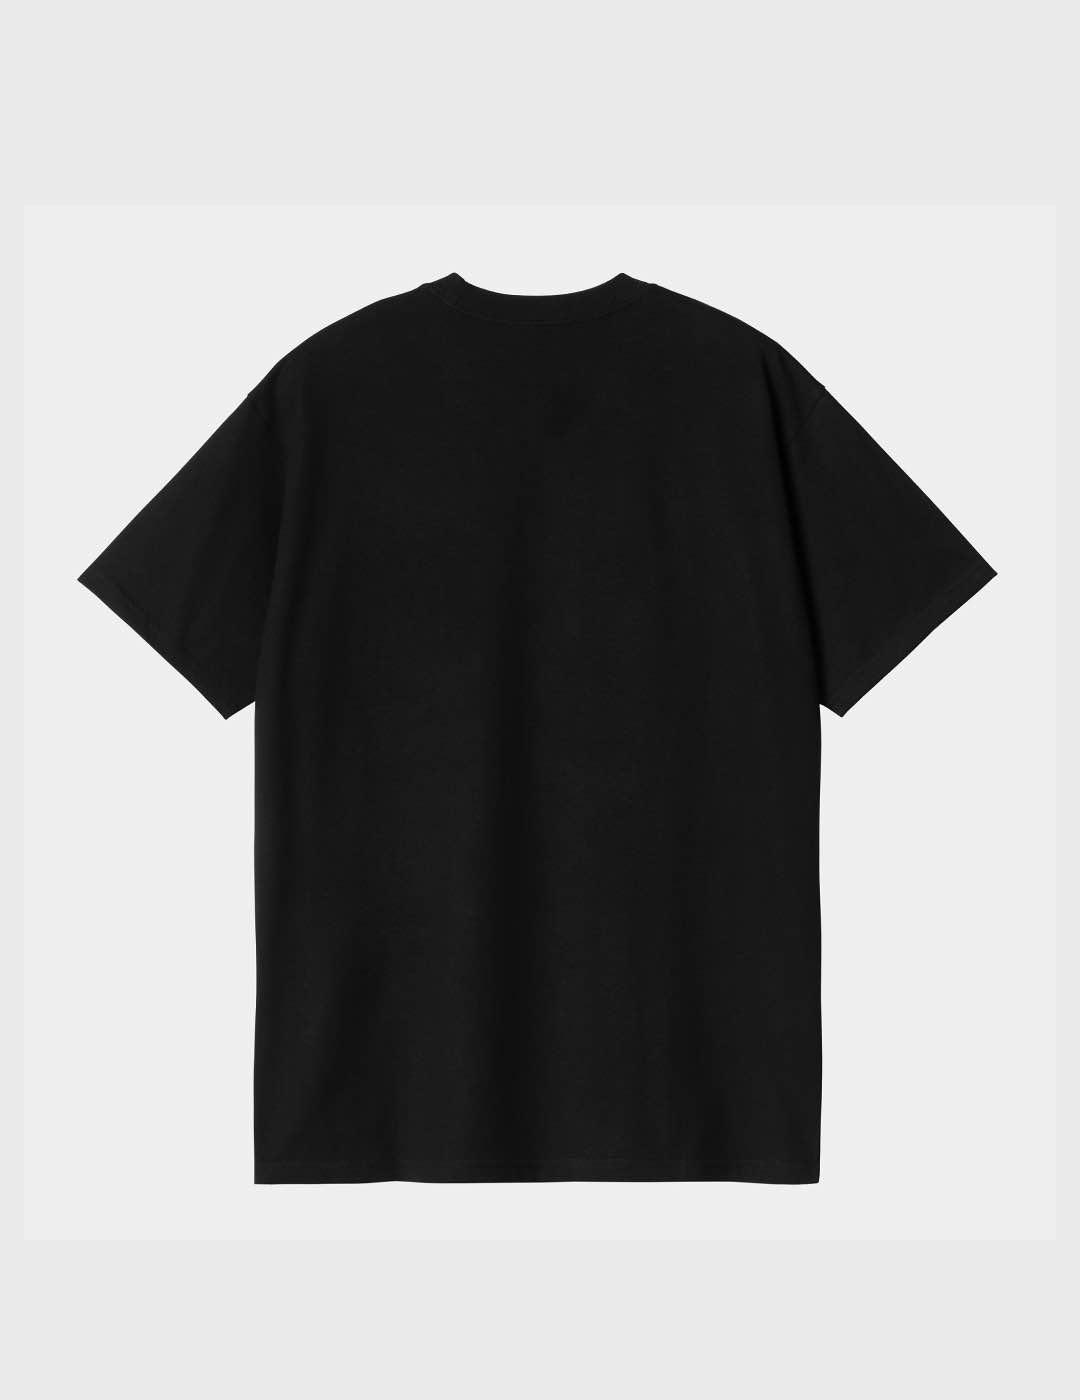 Camiseta Carhartt WIP S/S Amour Pocket BlackWhite